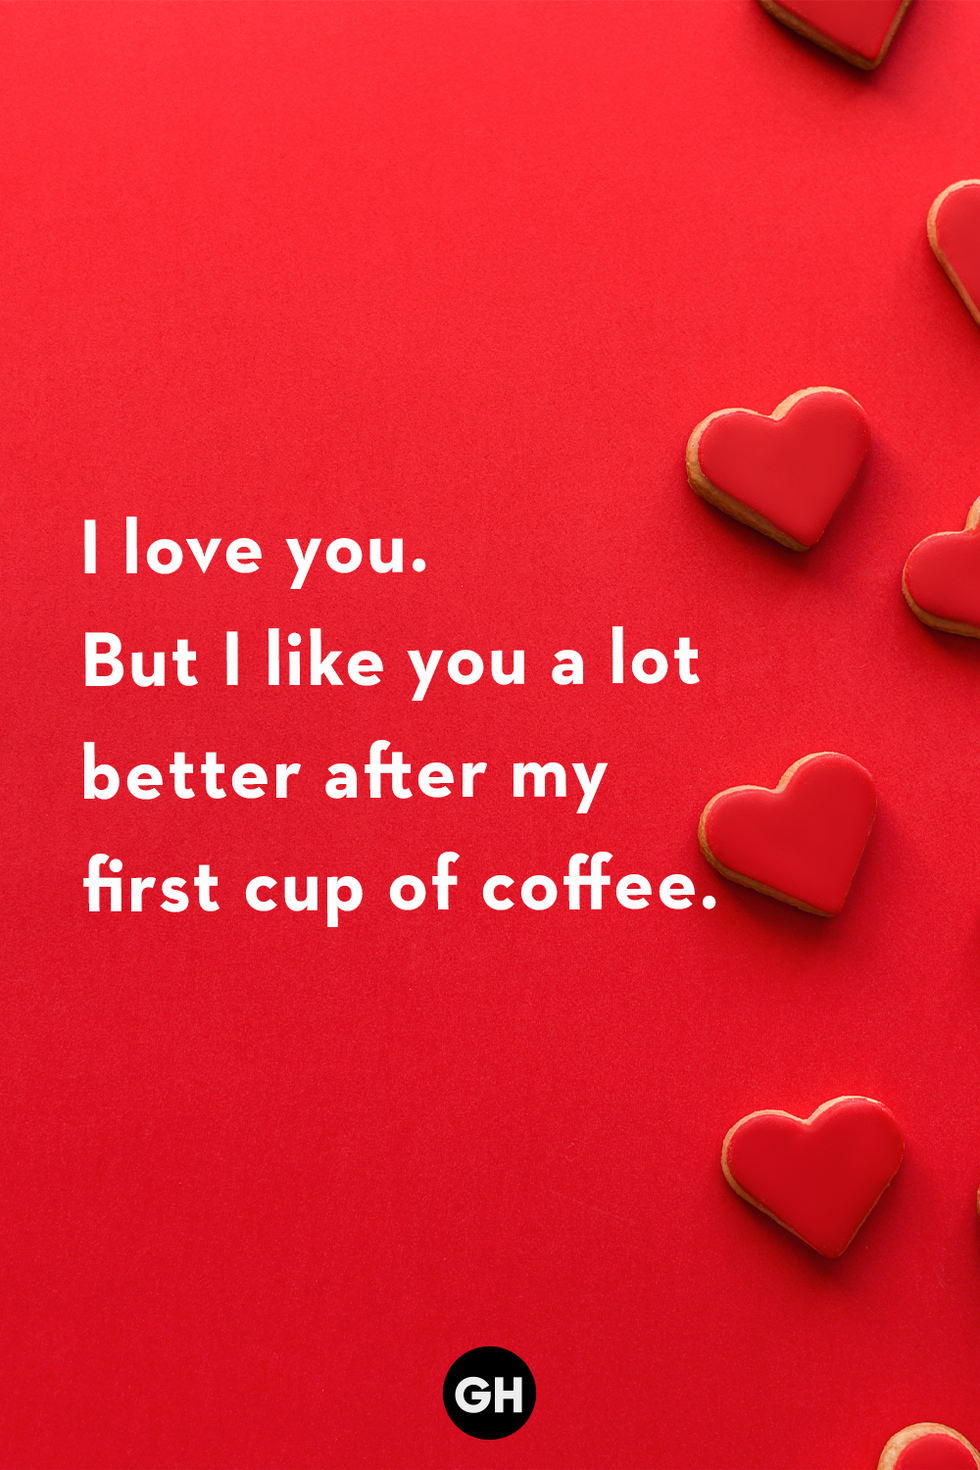 Honey I Love, Love, Love You! Husband Valentine Card | Custom